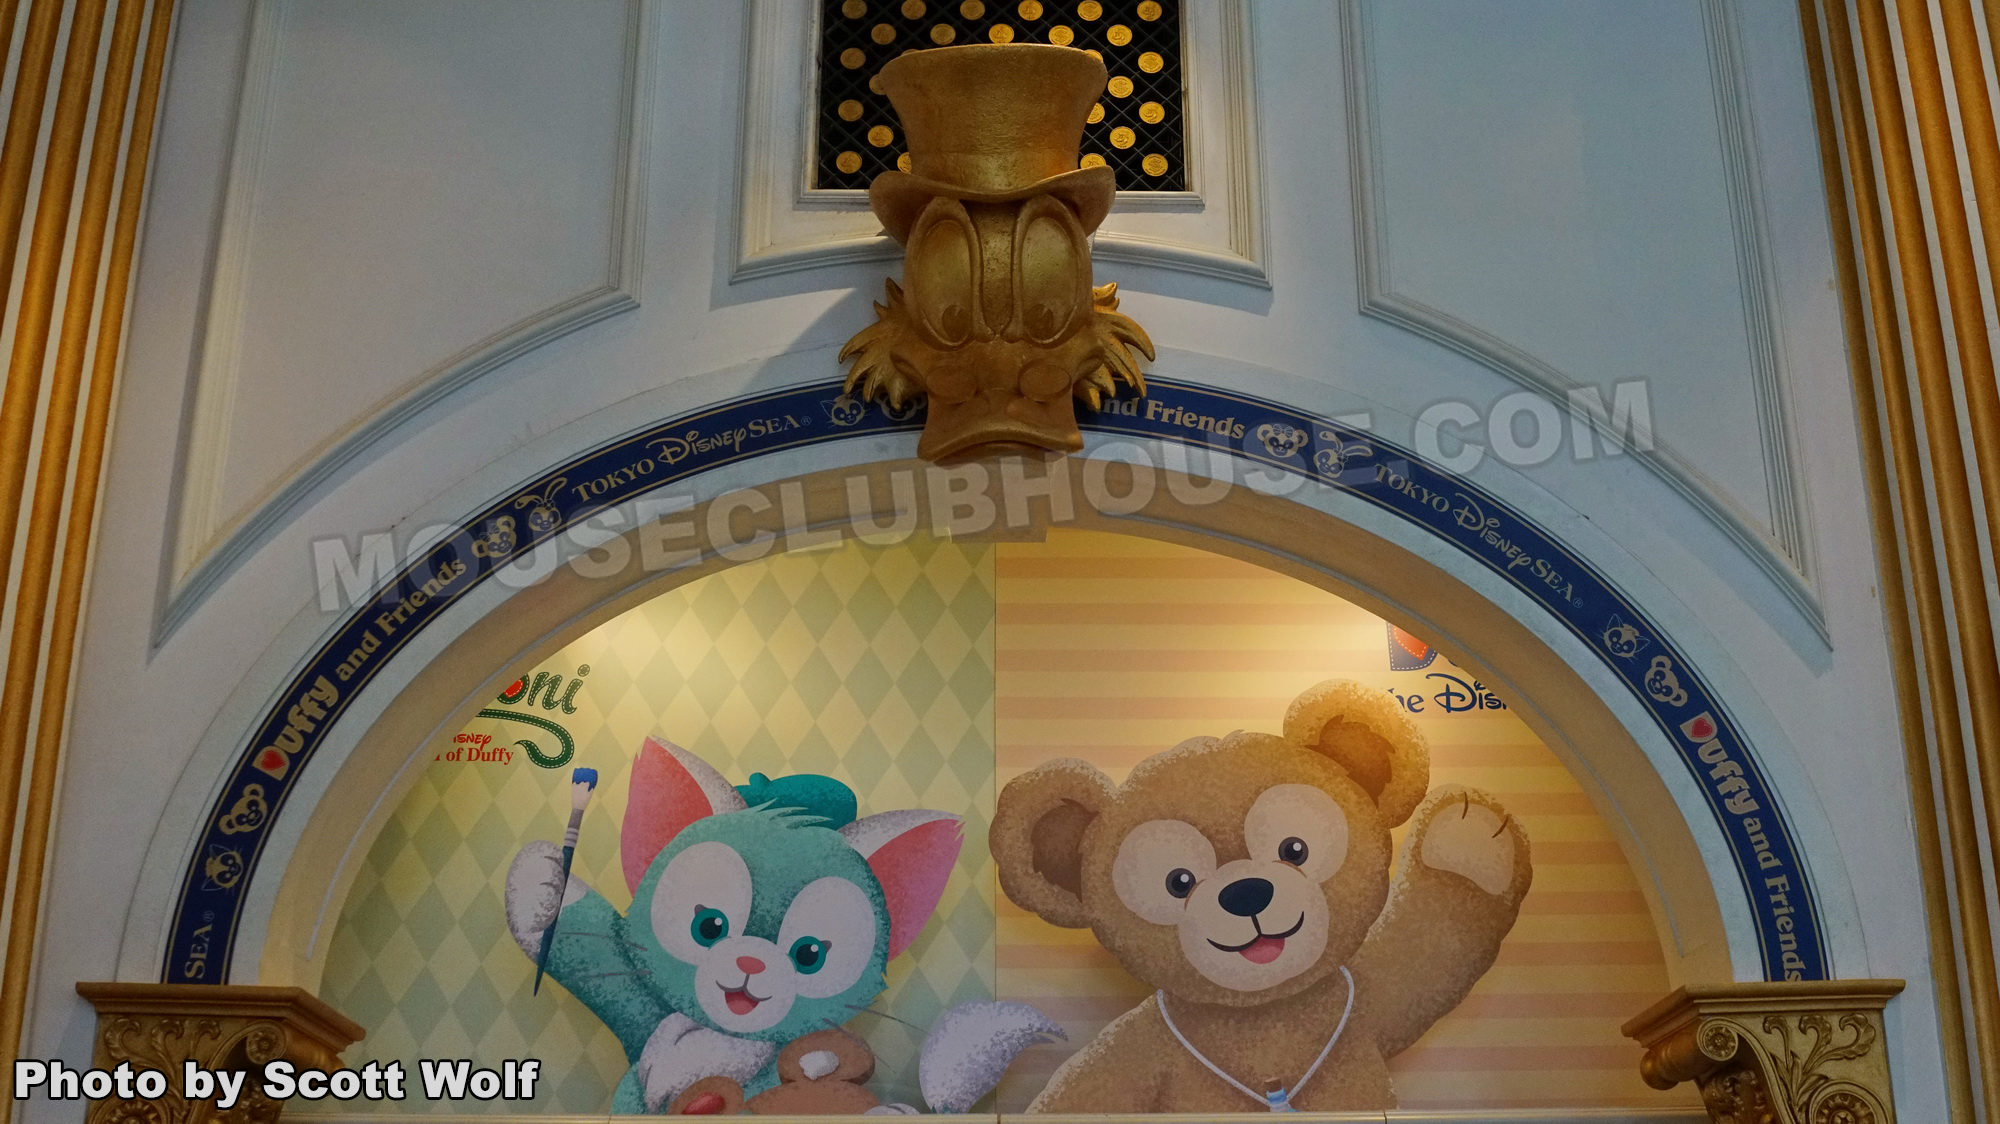 Disney characters Gelatoni and Duffy